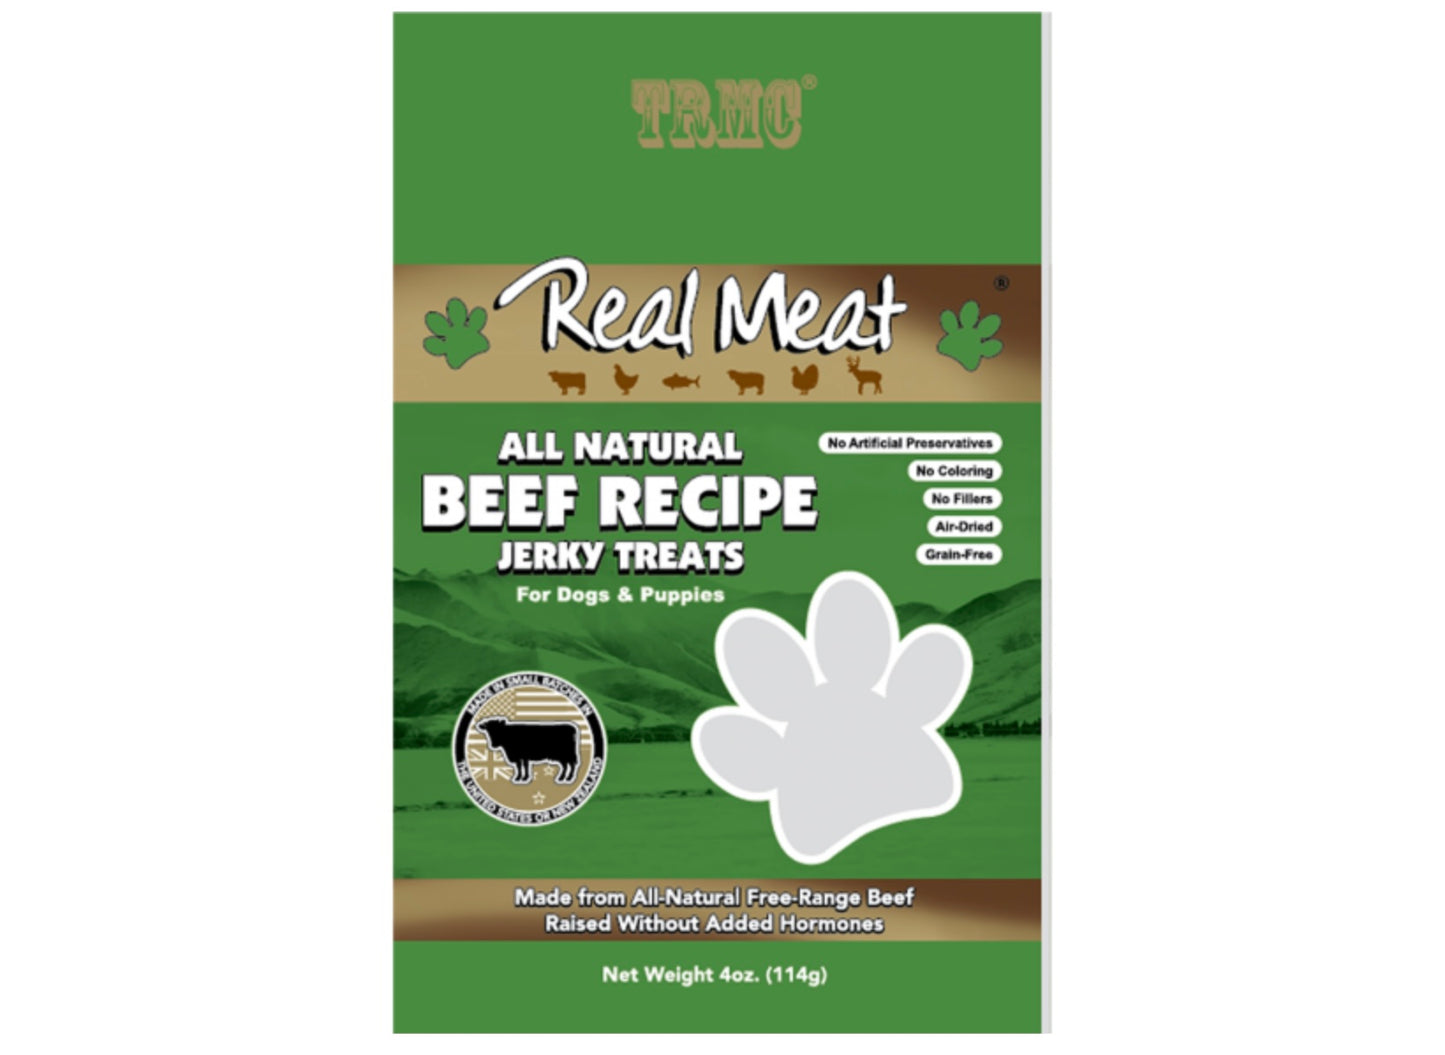 All Natural Beef Recipe Jerky Treats